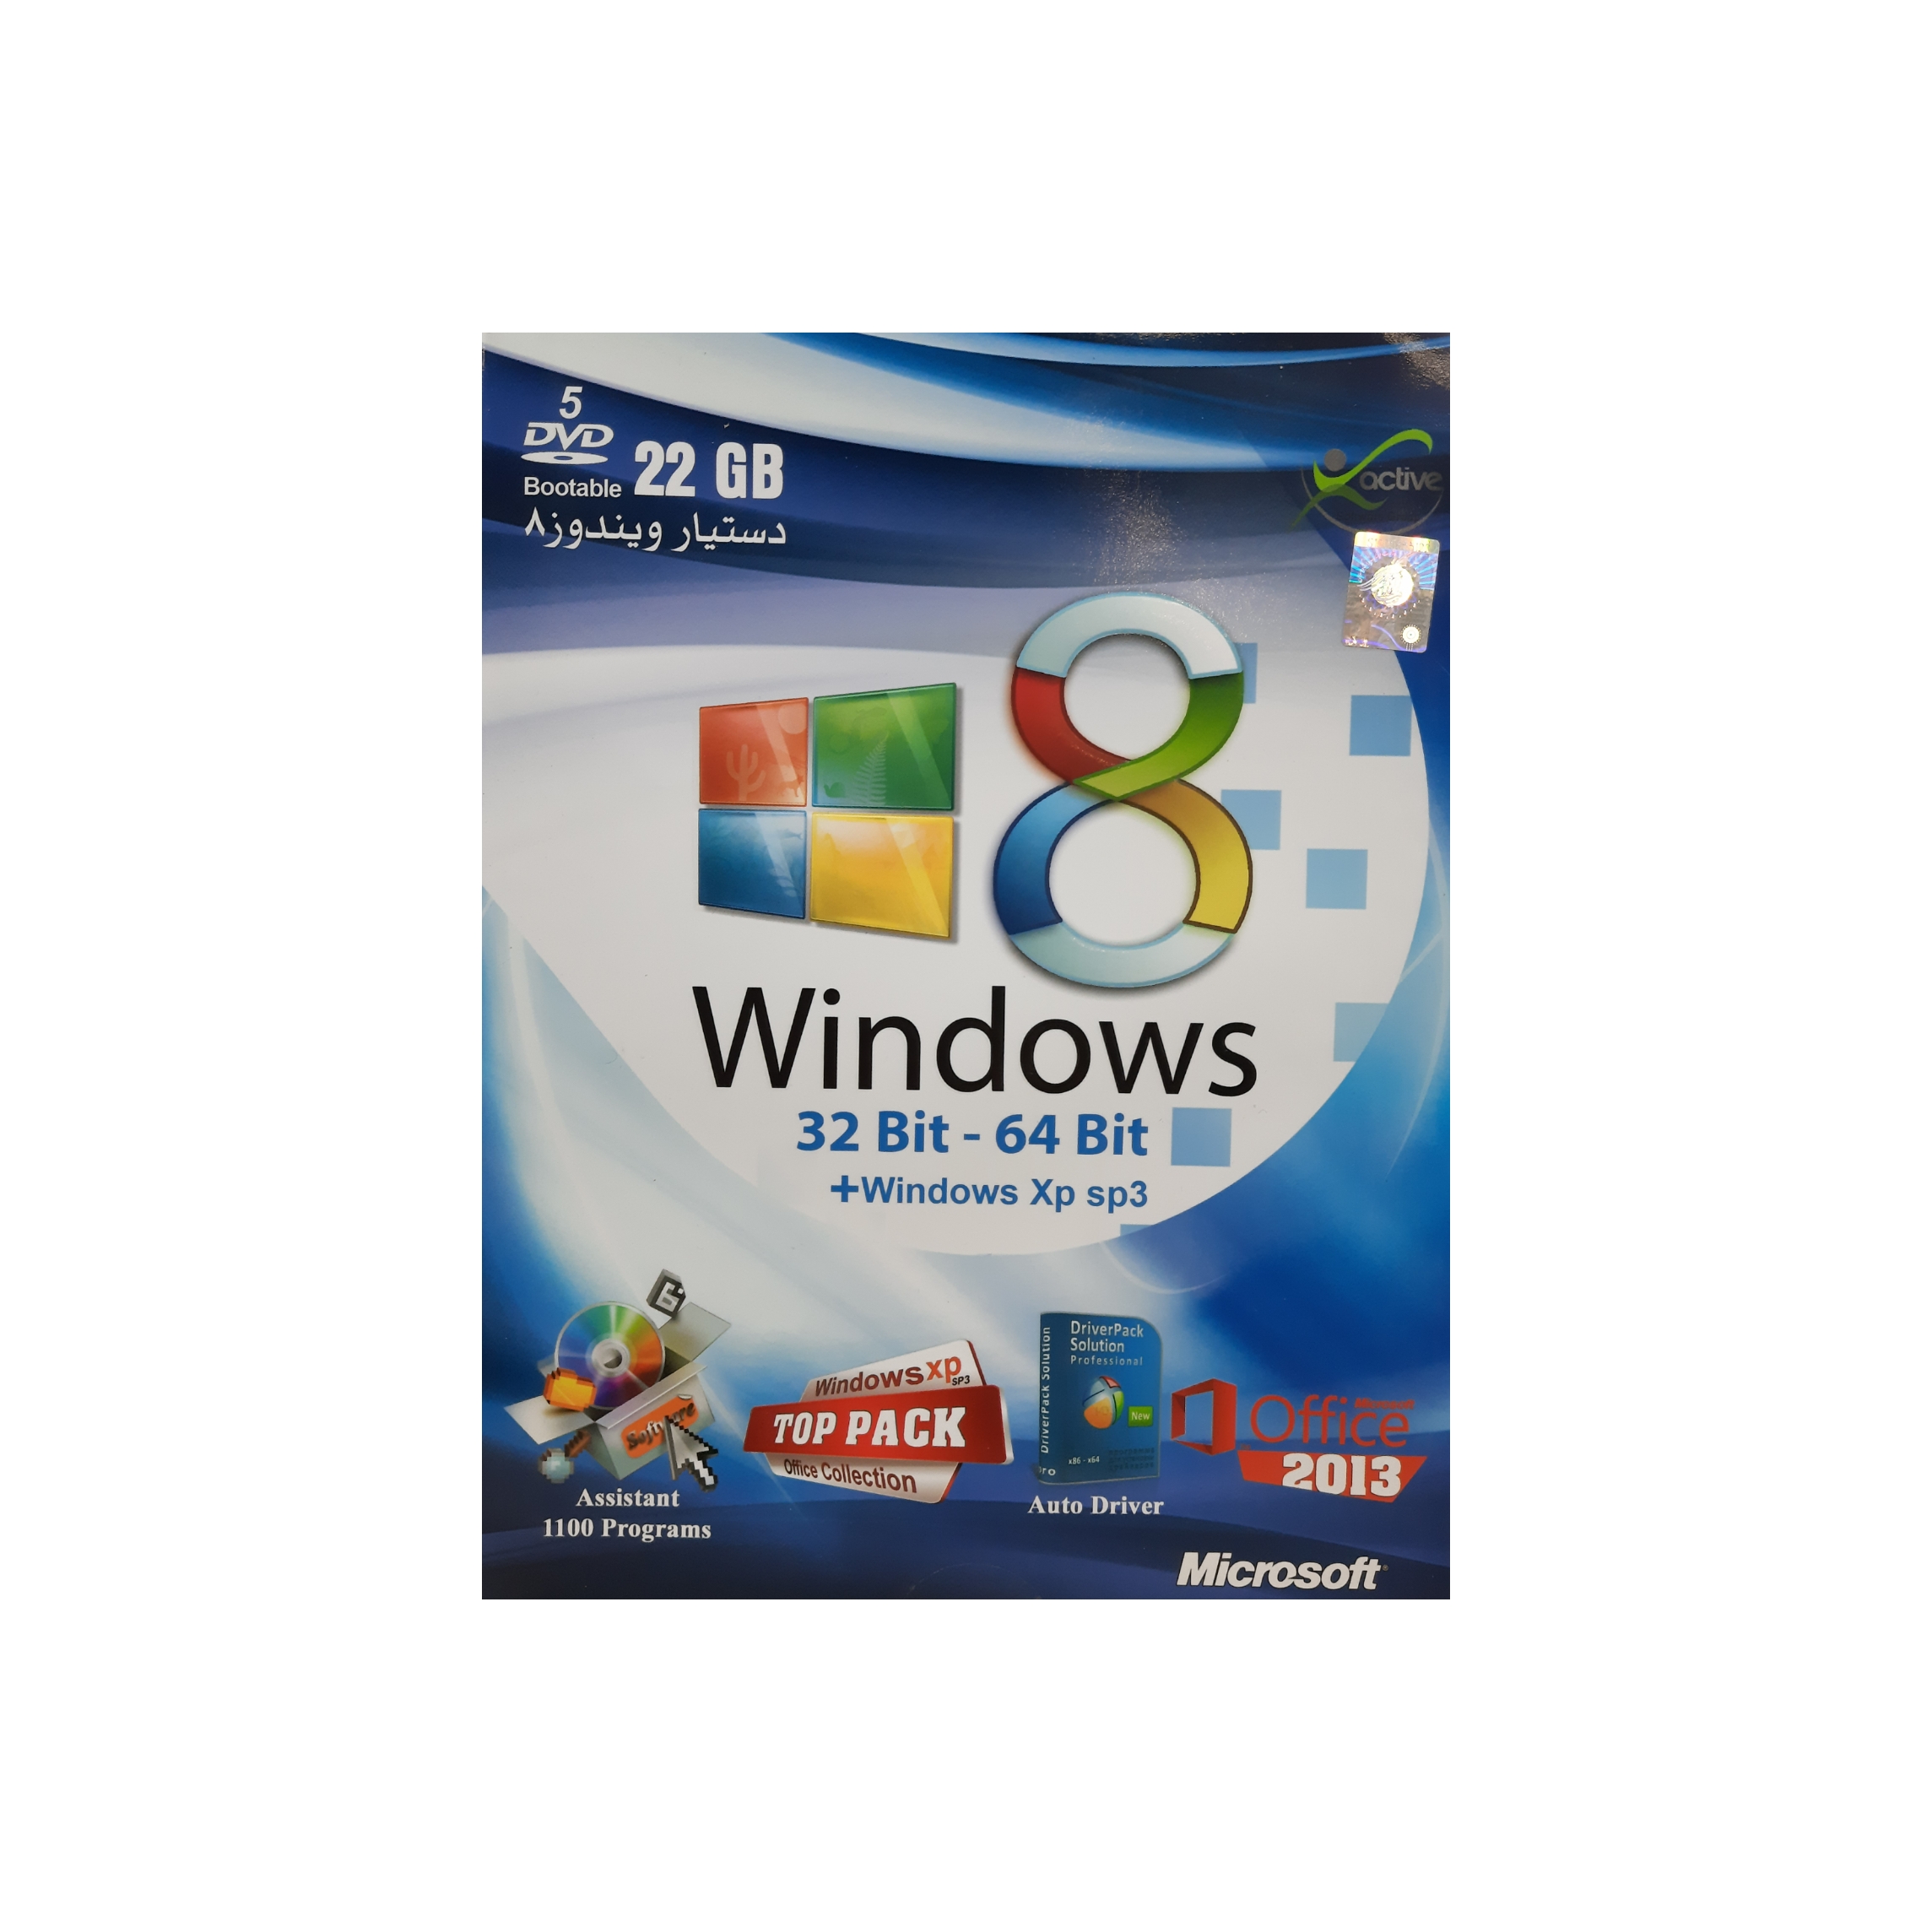 سیستم عامل windows 8 + windows xp sp3 + office 2013 + auto driver + assistant نشر اکتیو